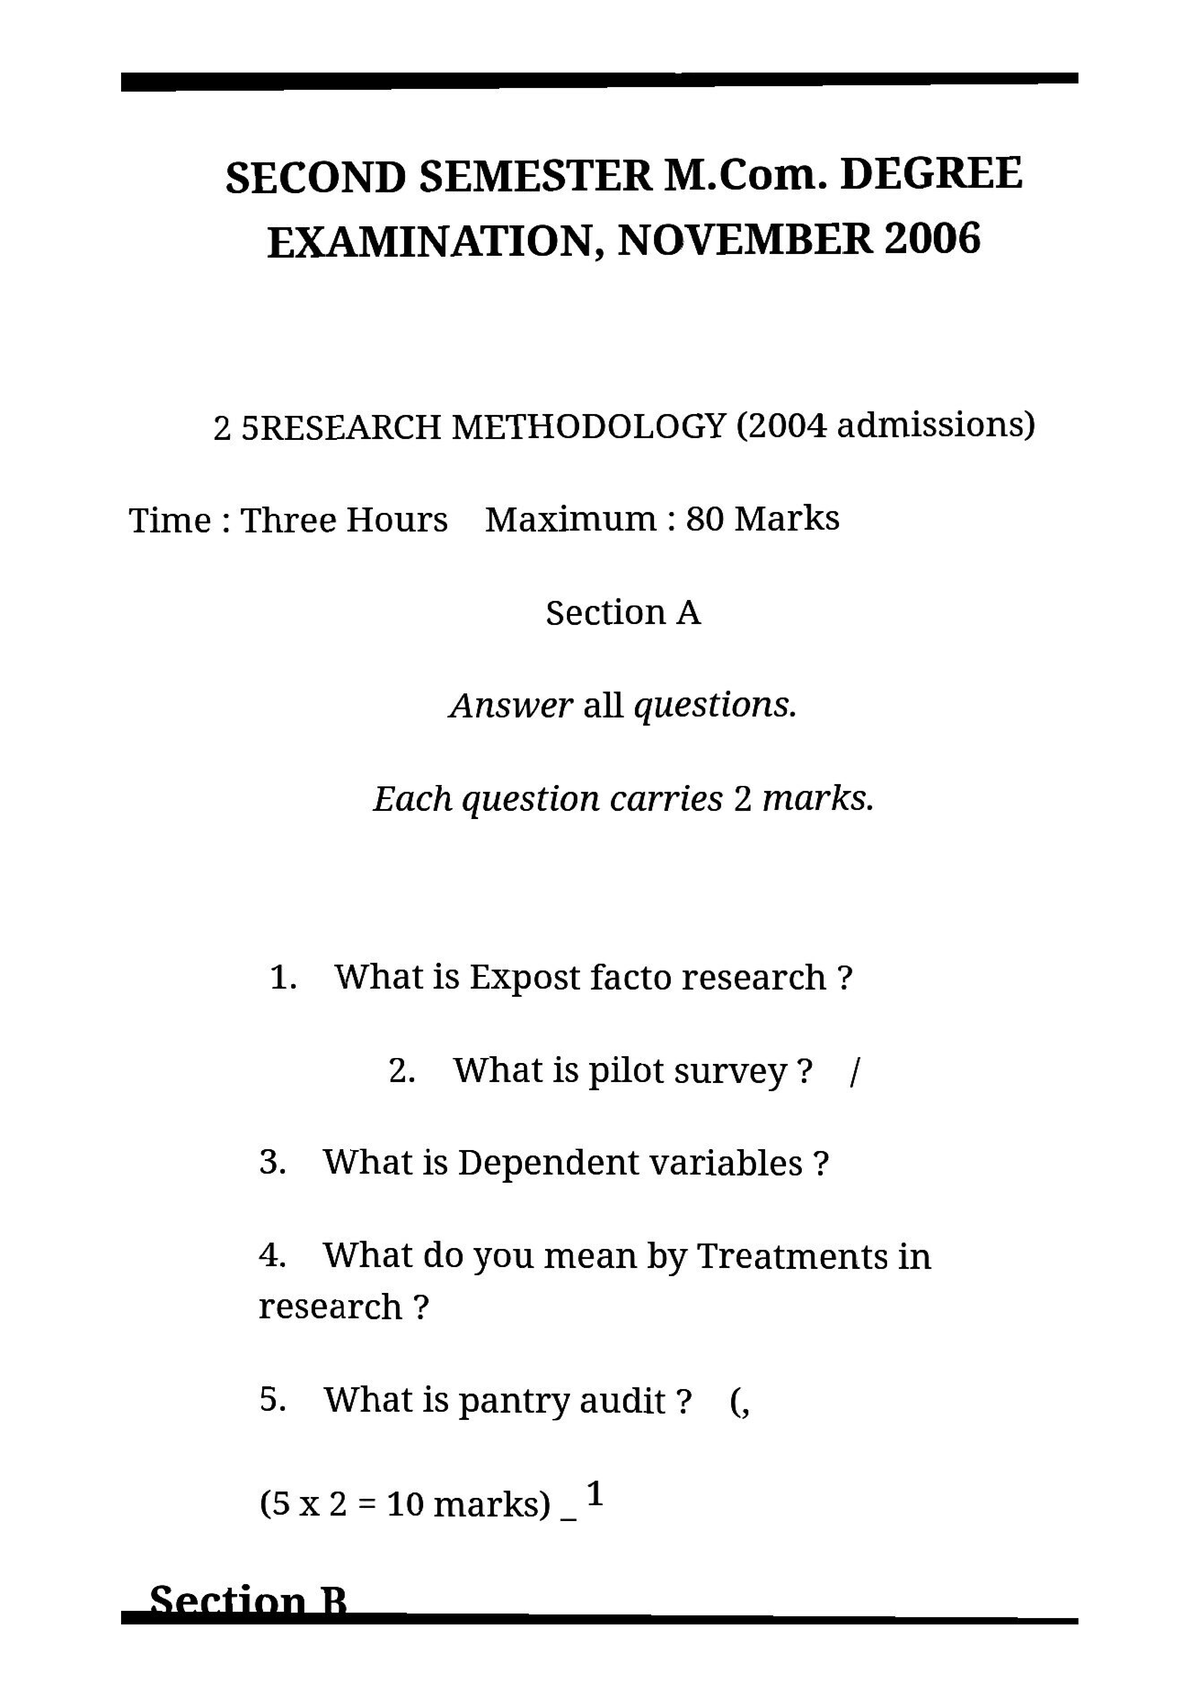 mcom sem 2 research methodology question paper